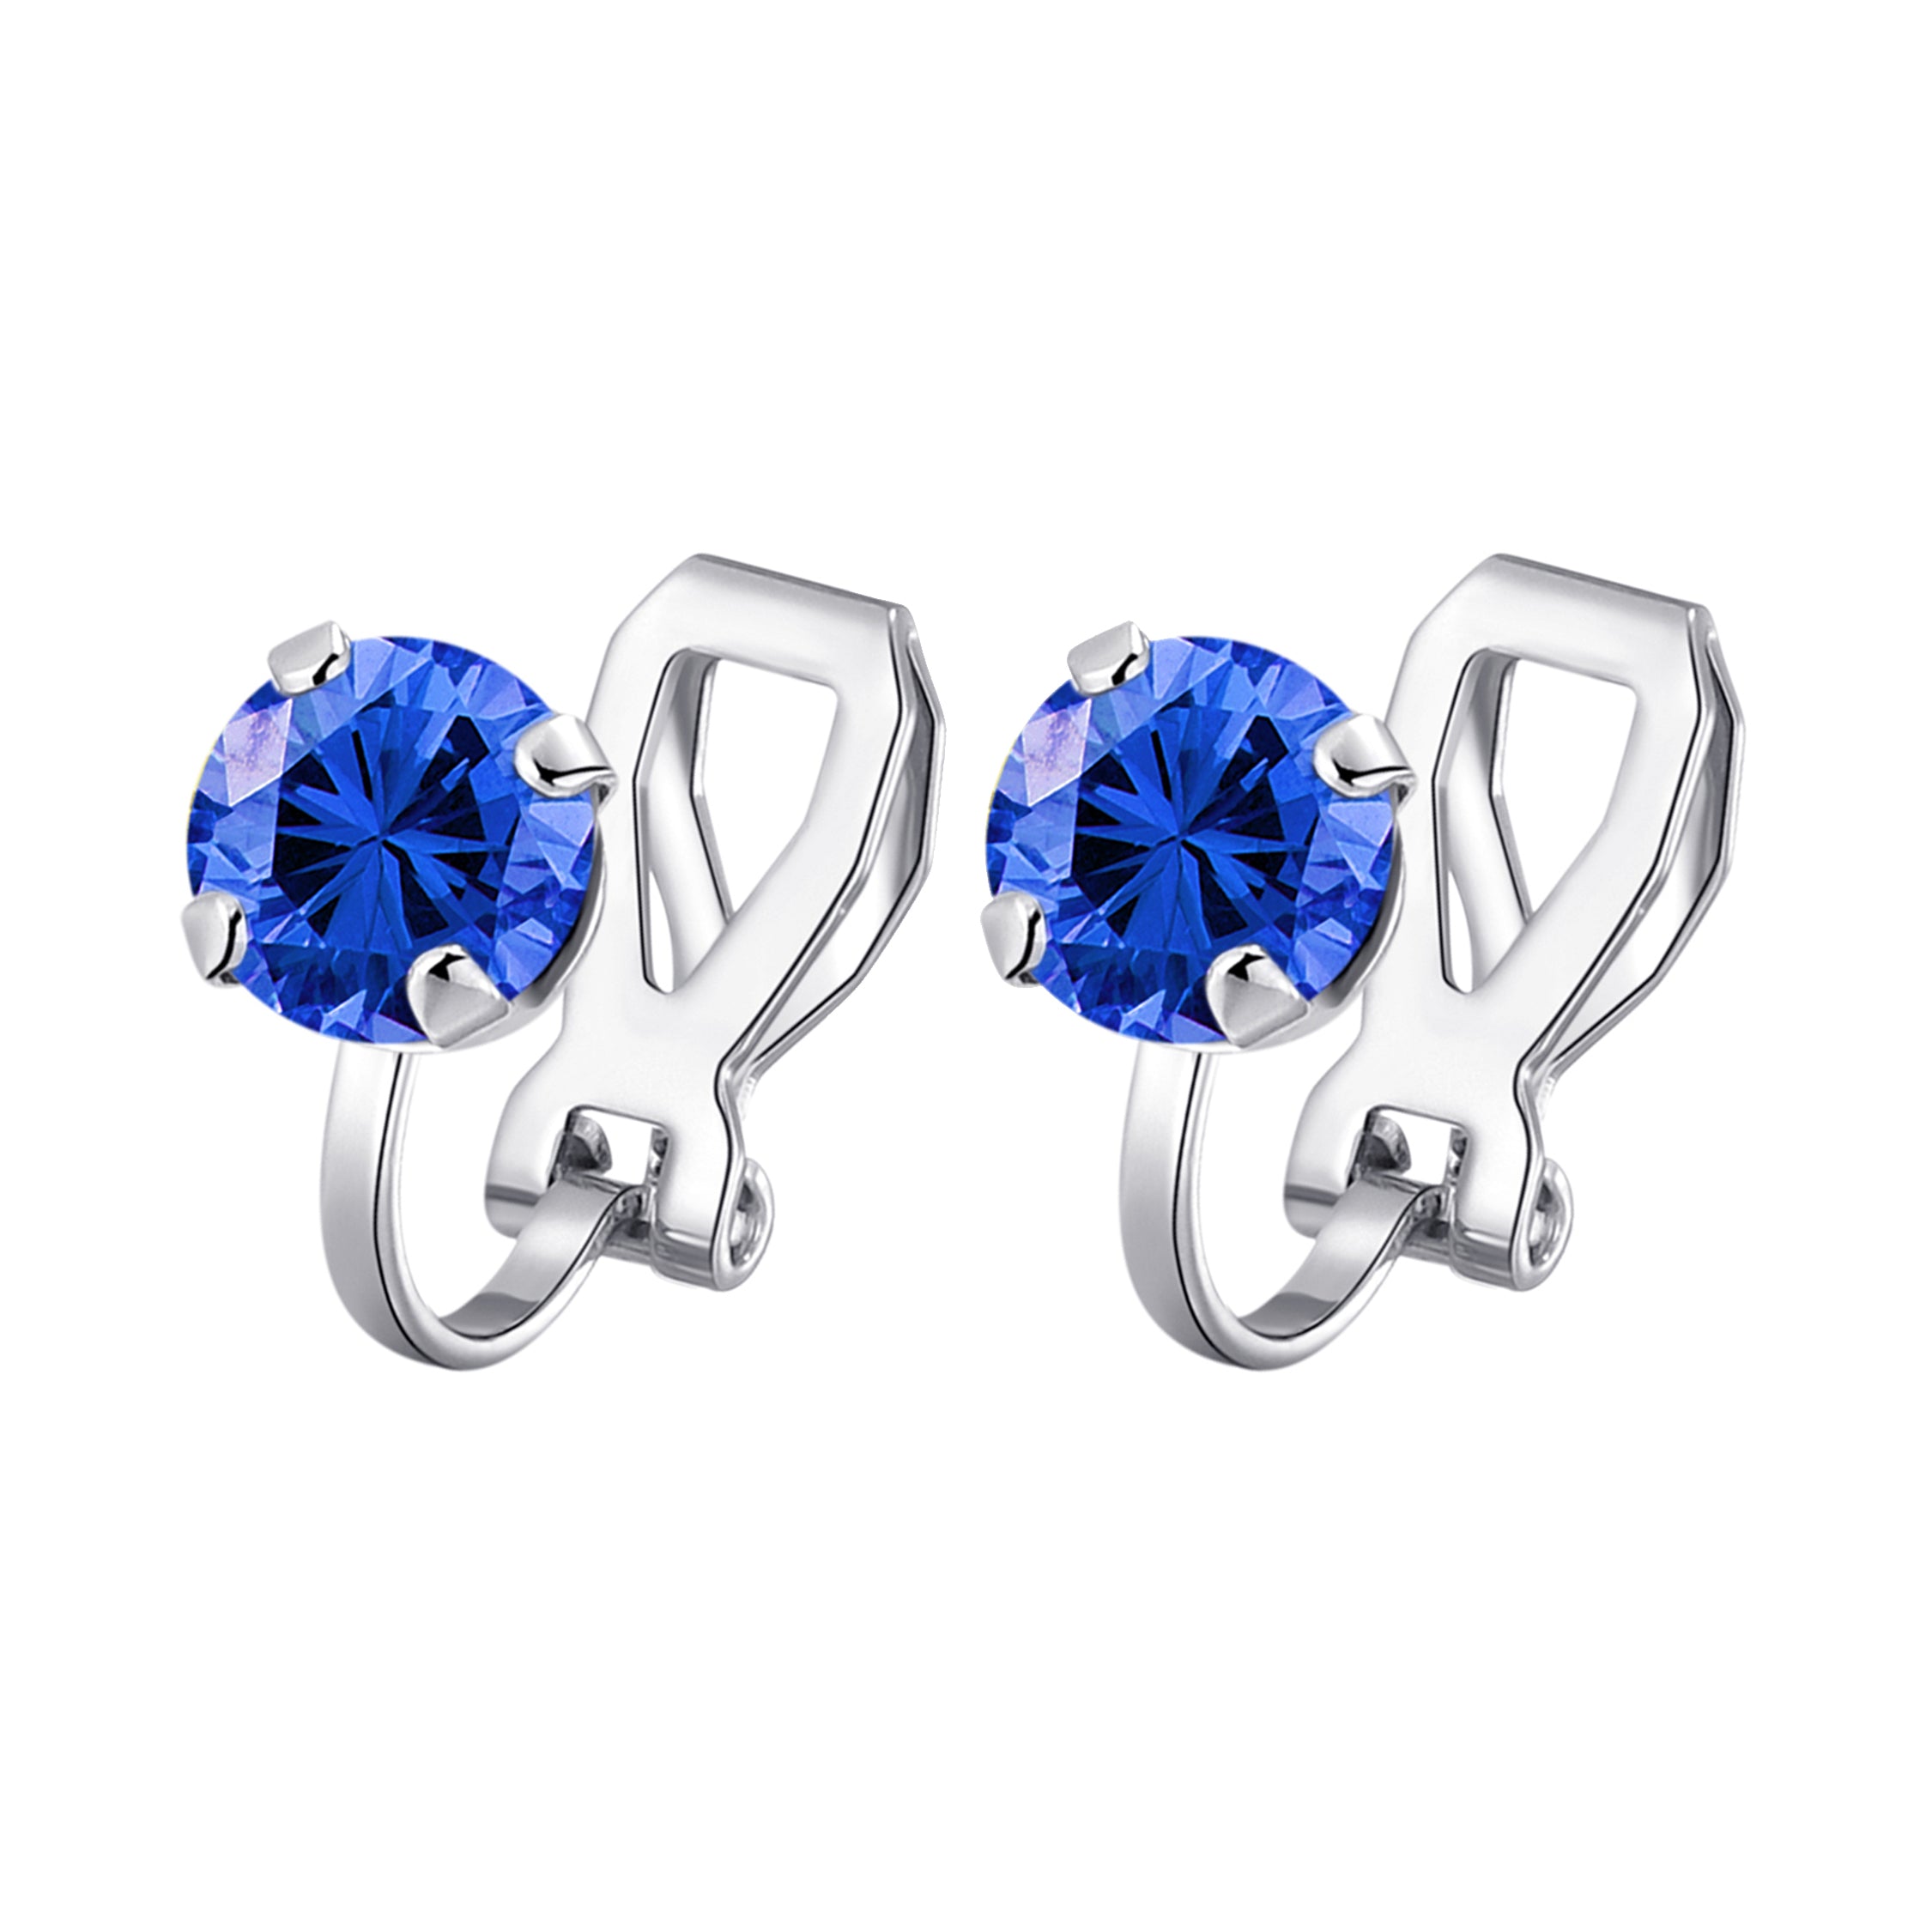 Dark Blue Crystal Clip On Earrings Created with Zircondia® Crystals by Philip Jones Jewellery